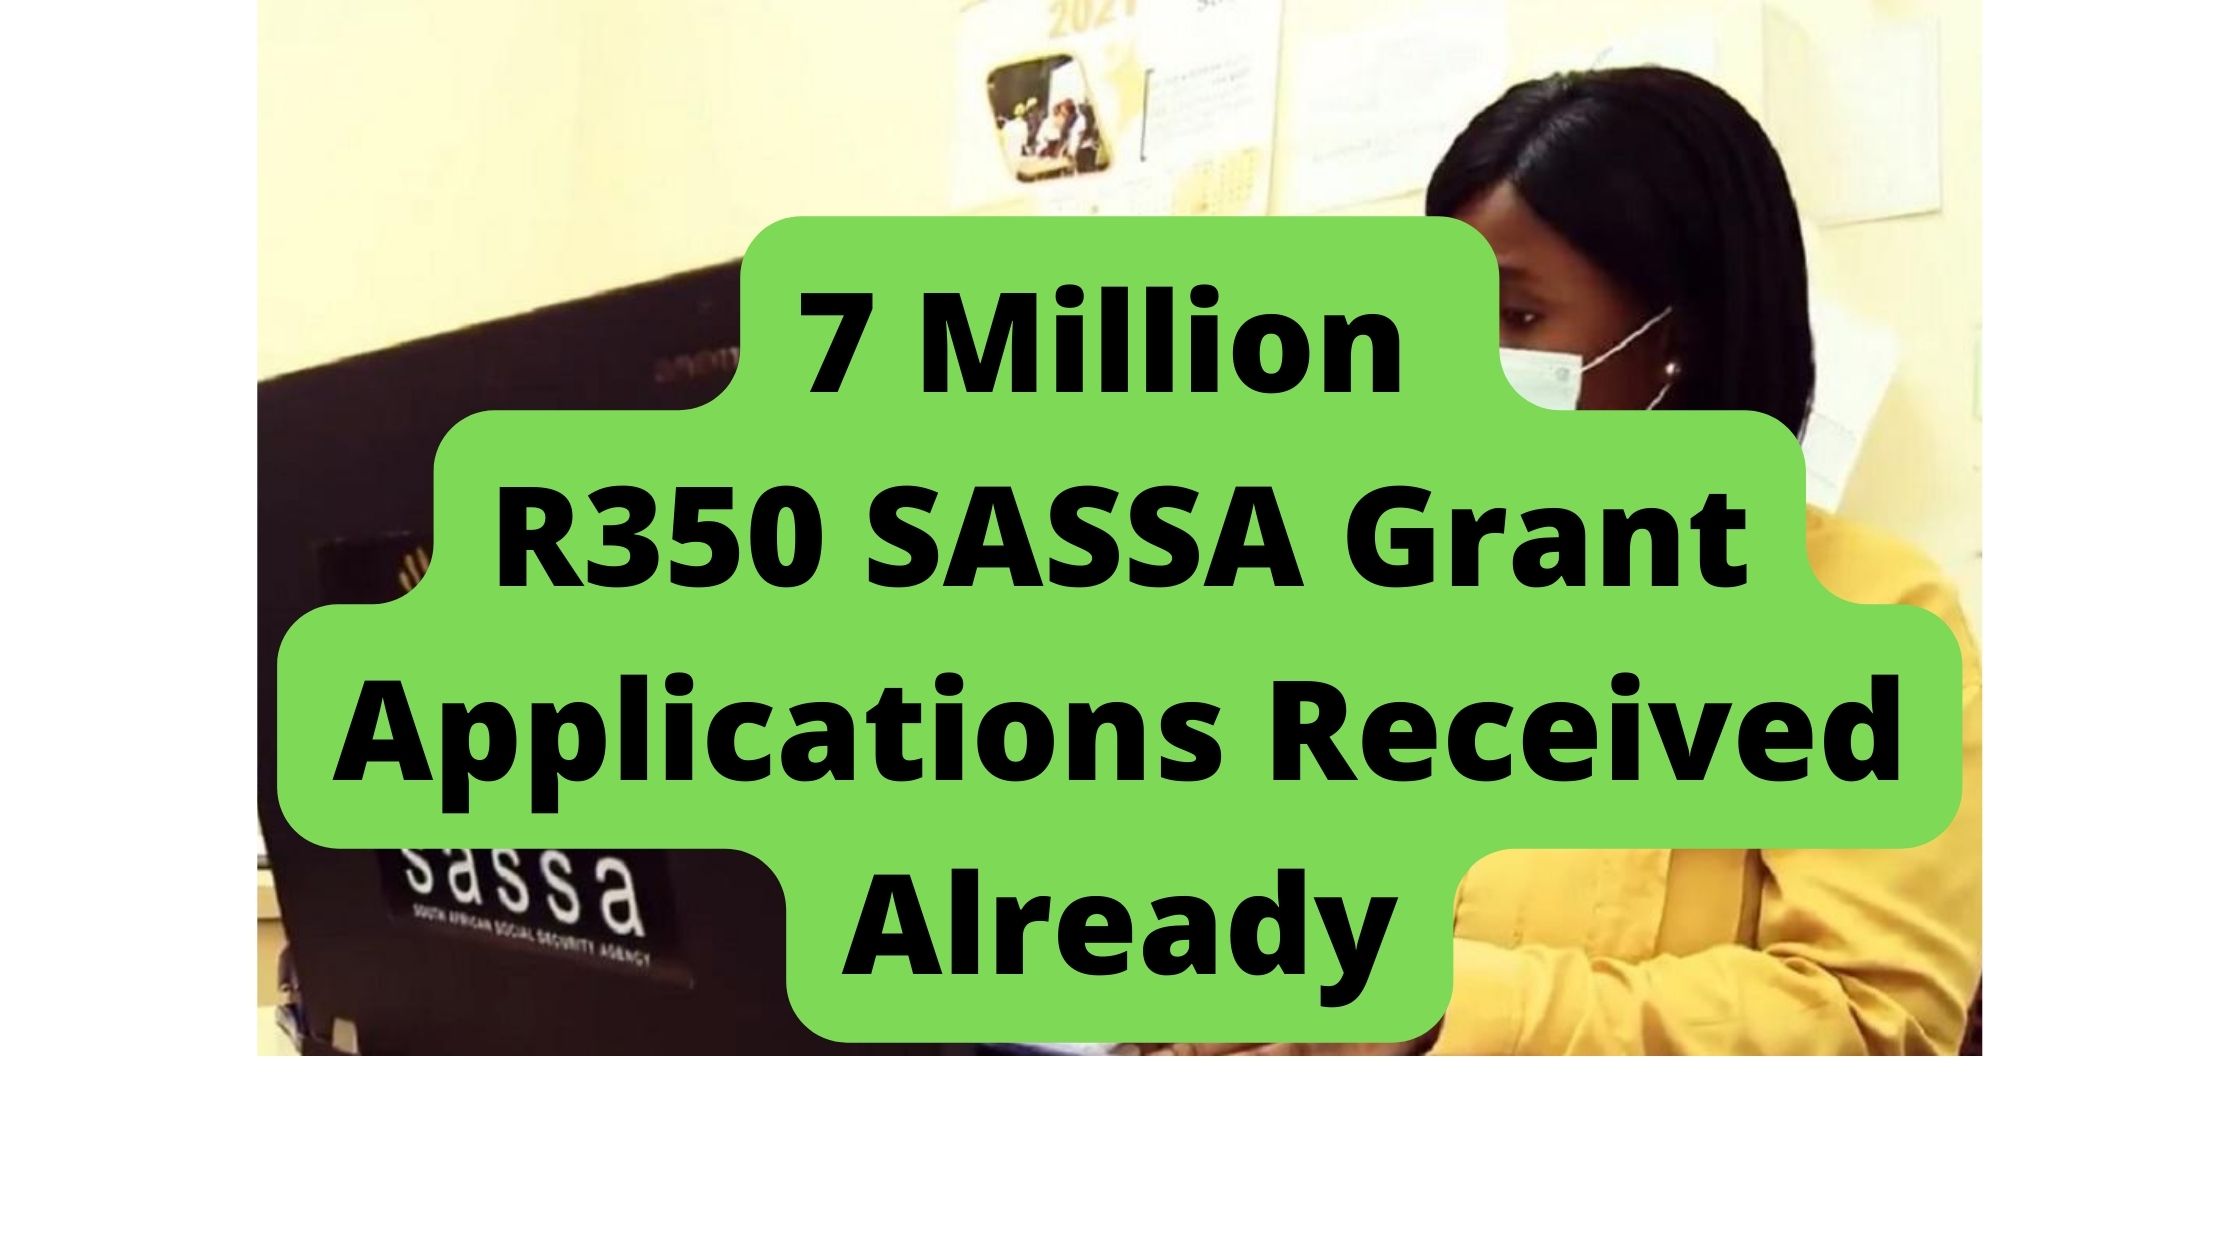 7 Million R350 SASSA Grant Applications Received Already